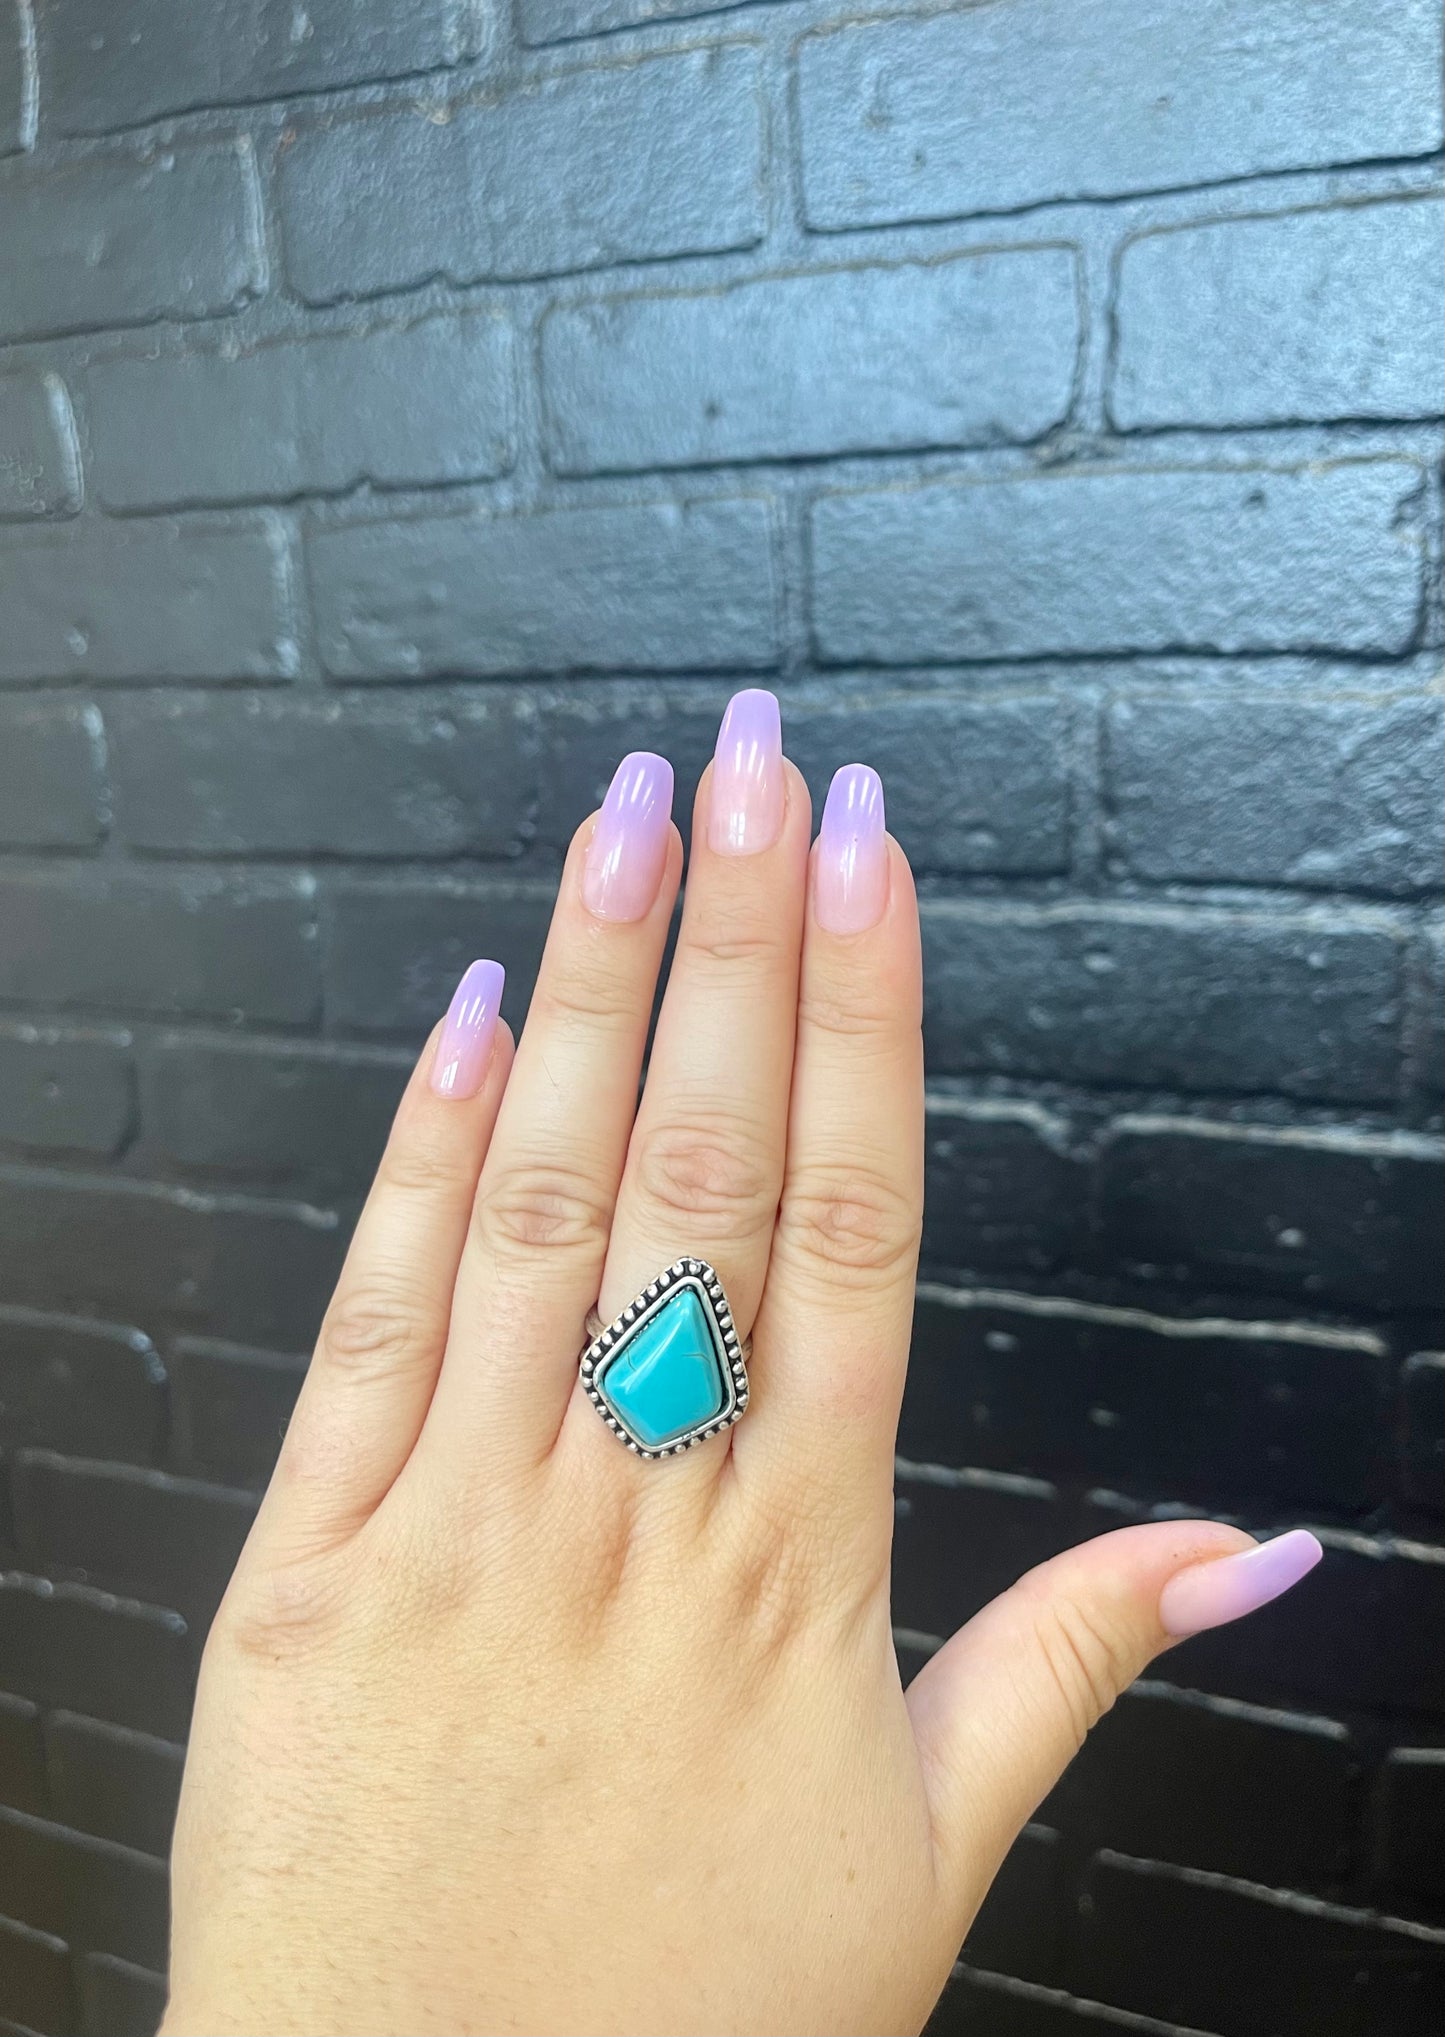 The Turquoise Diamond Ring